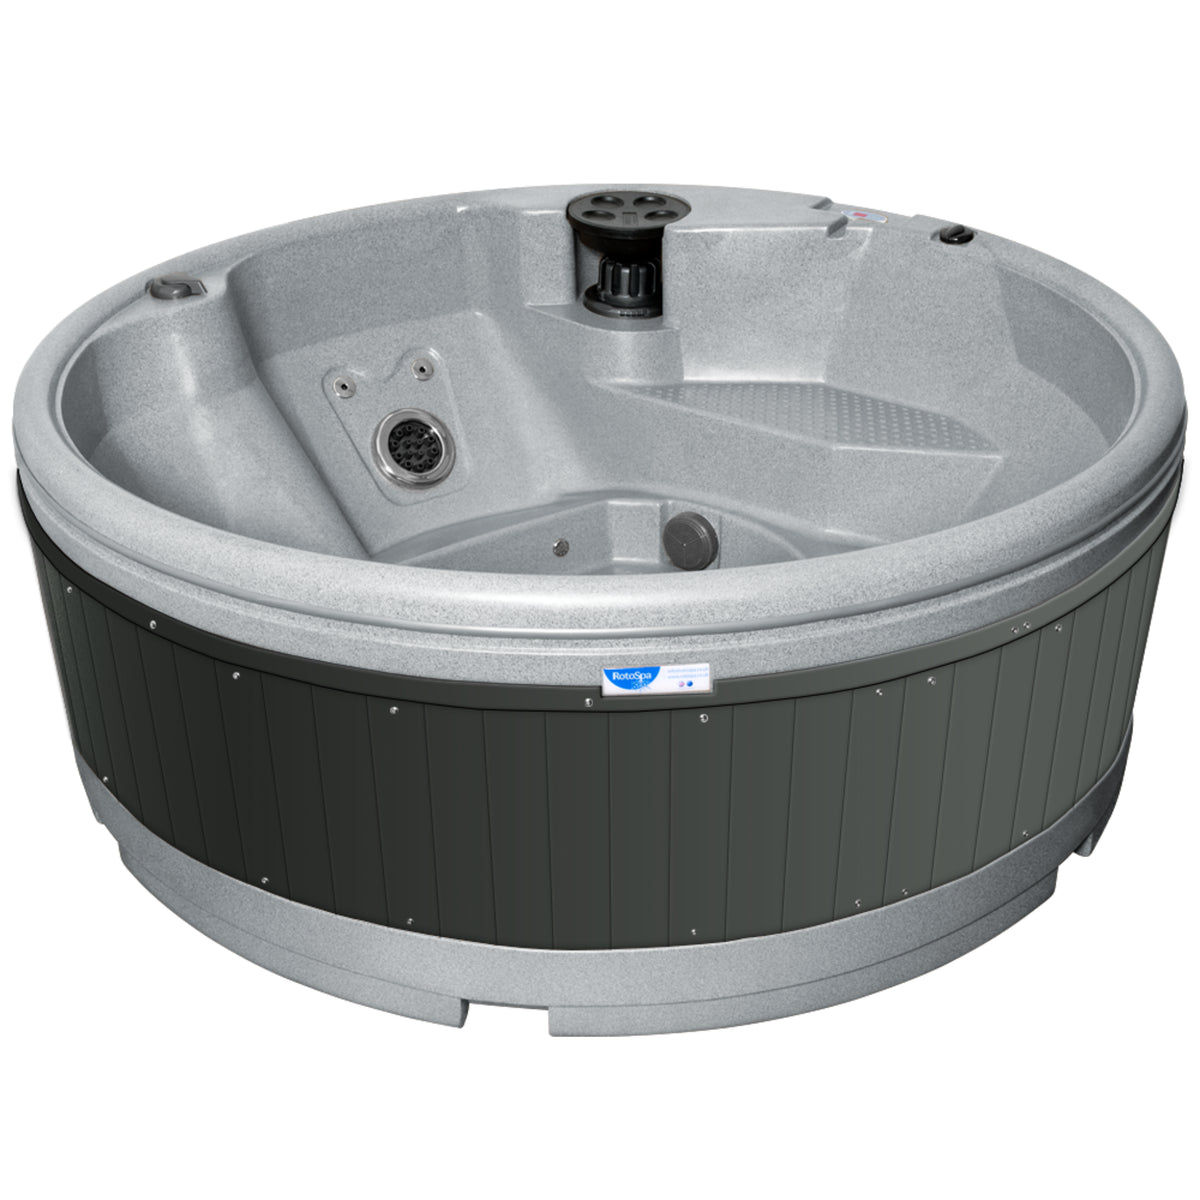 RotoSpa QuatroSpa | 6 Person Hot Tub with Optional Cold Plunge Feature ...